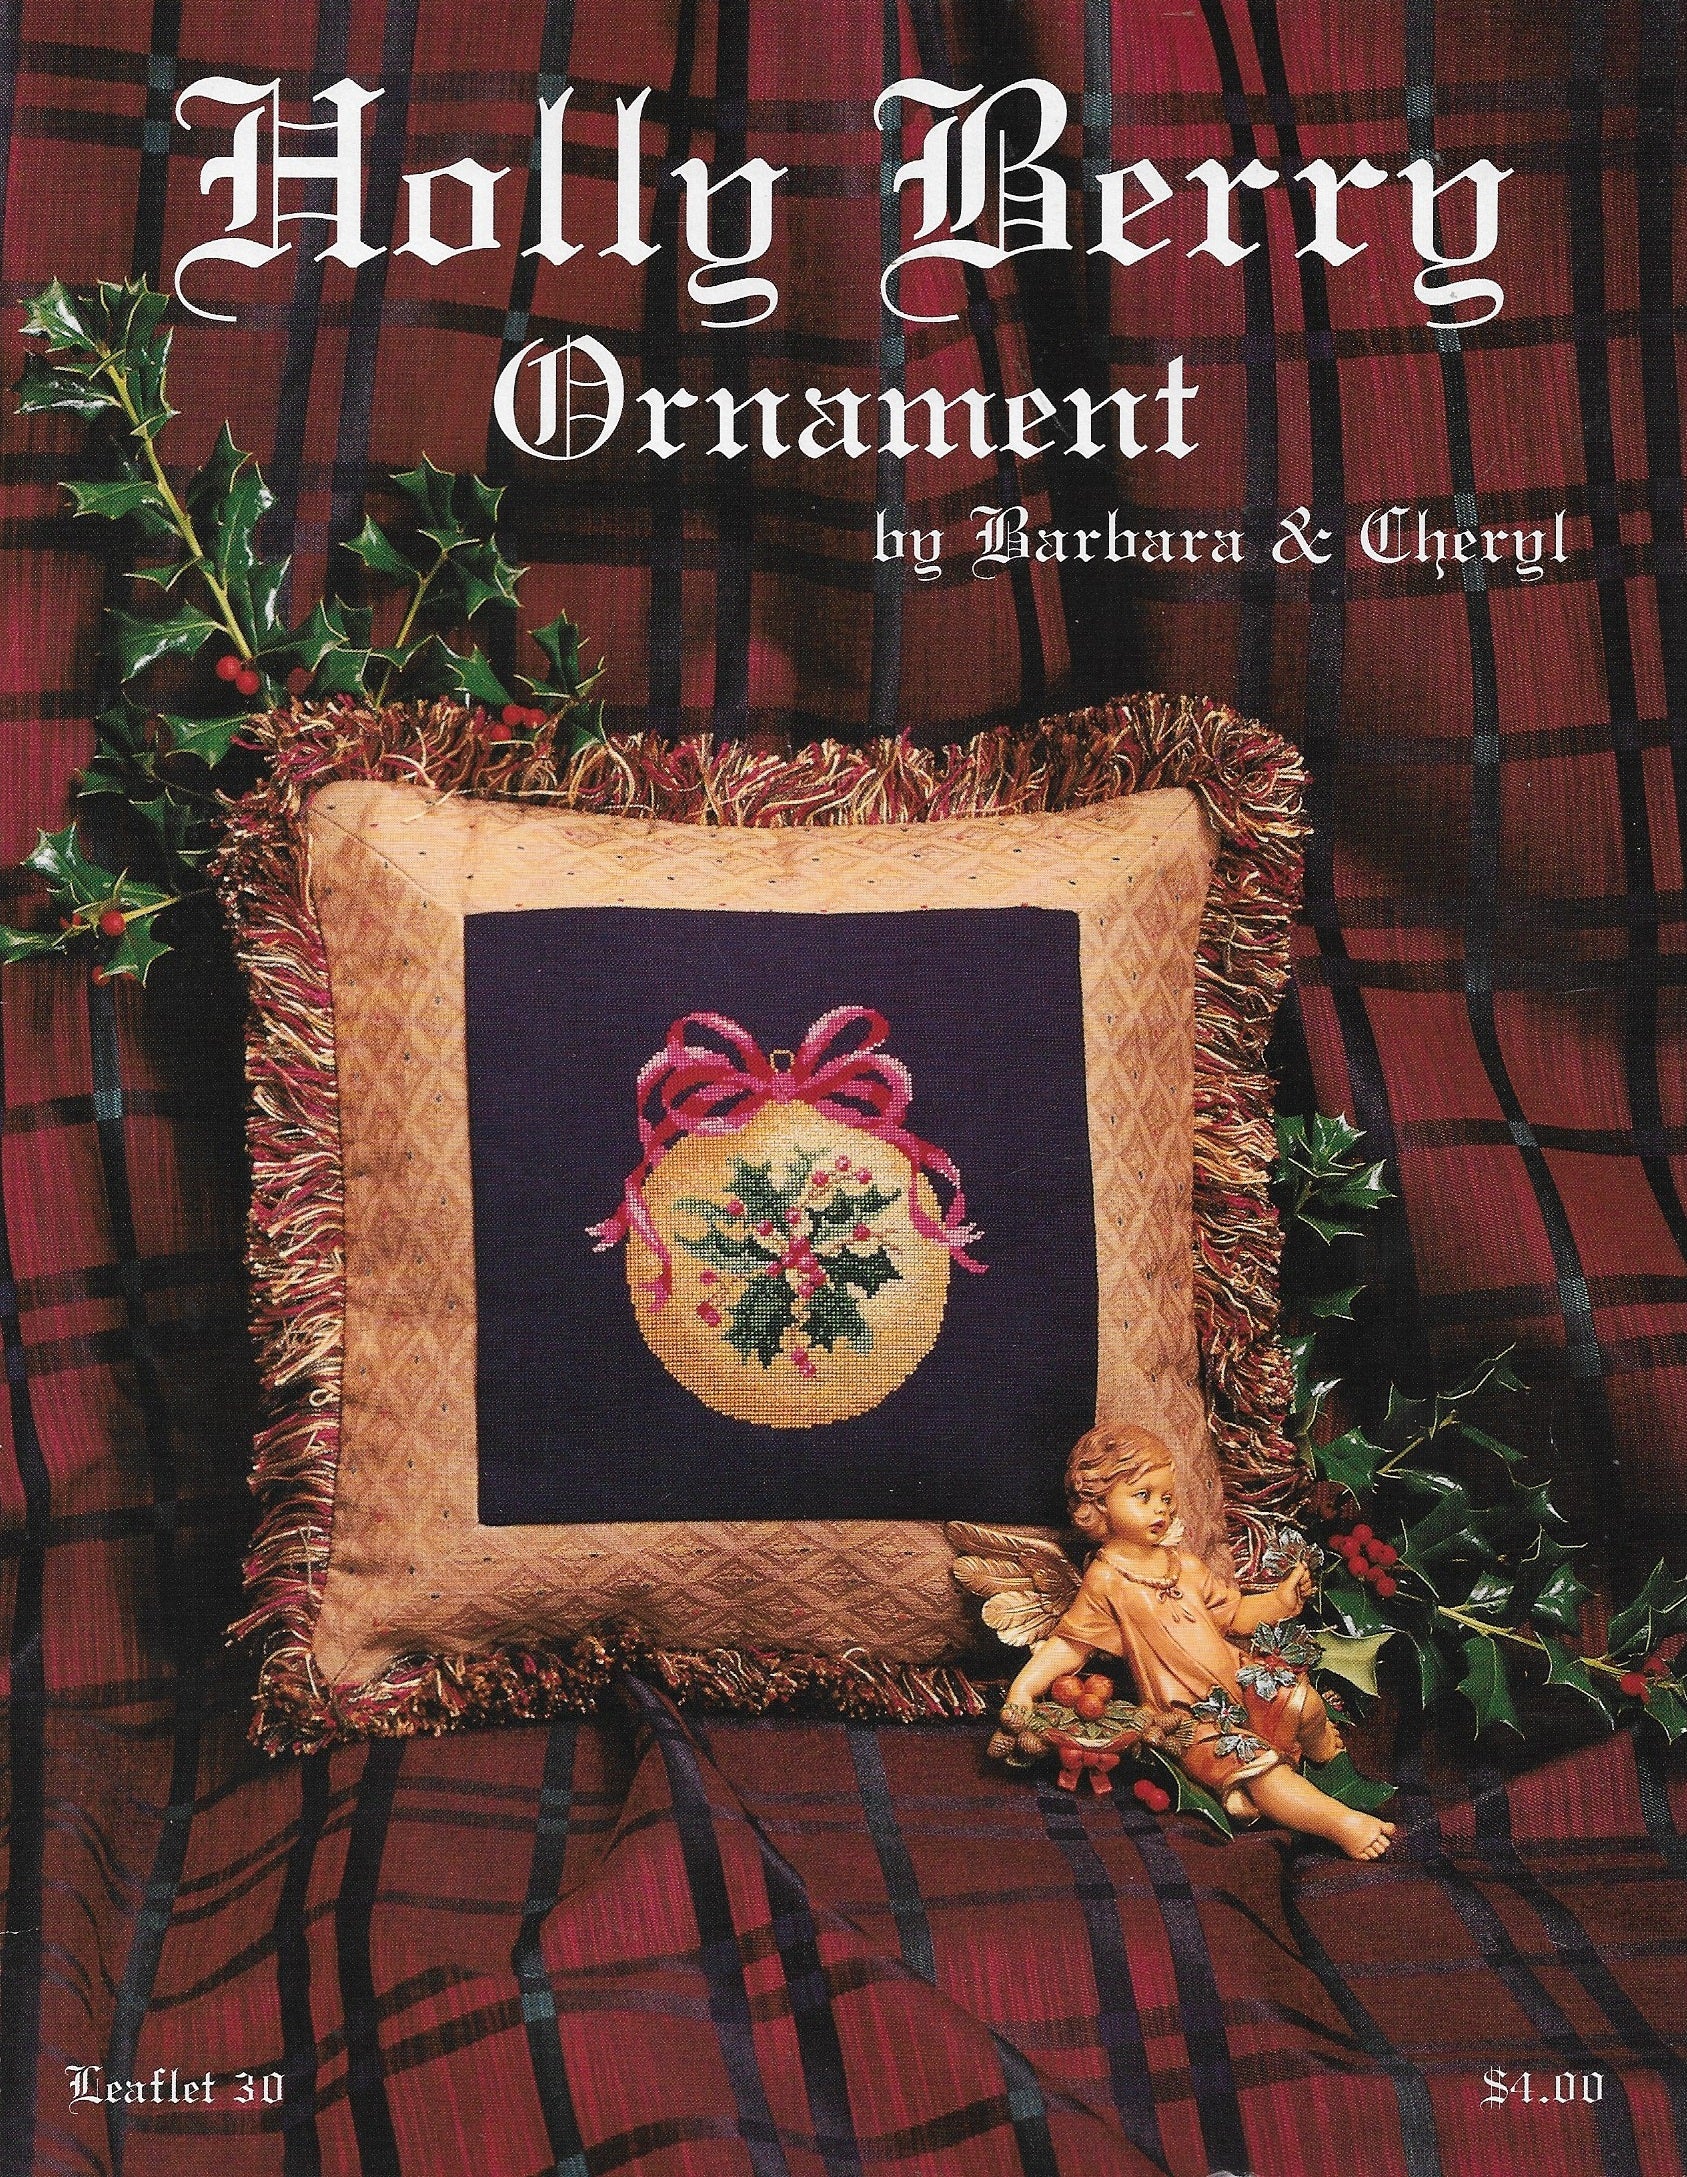 Barbara & Cheryl Holly Berry Ornament 30 christmas cross stitch ornament pattern